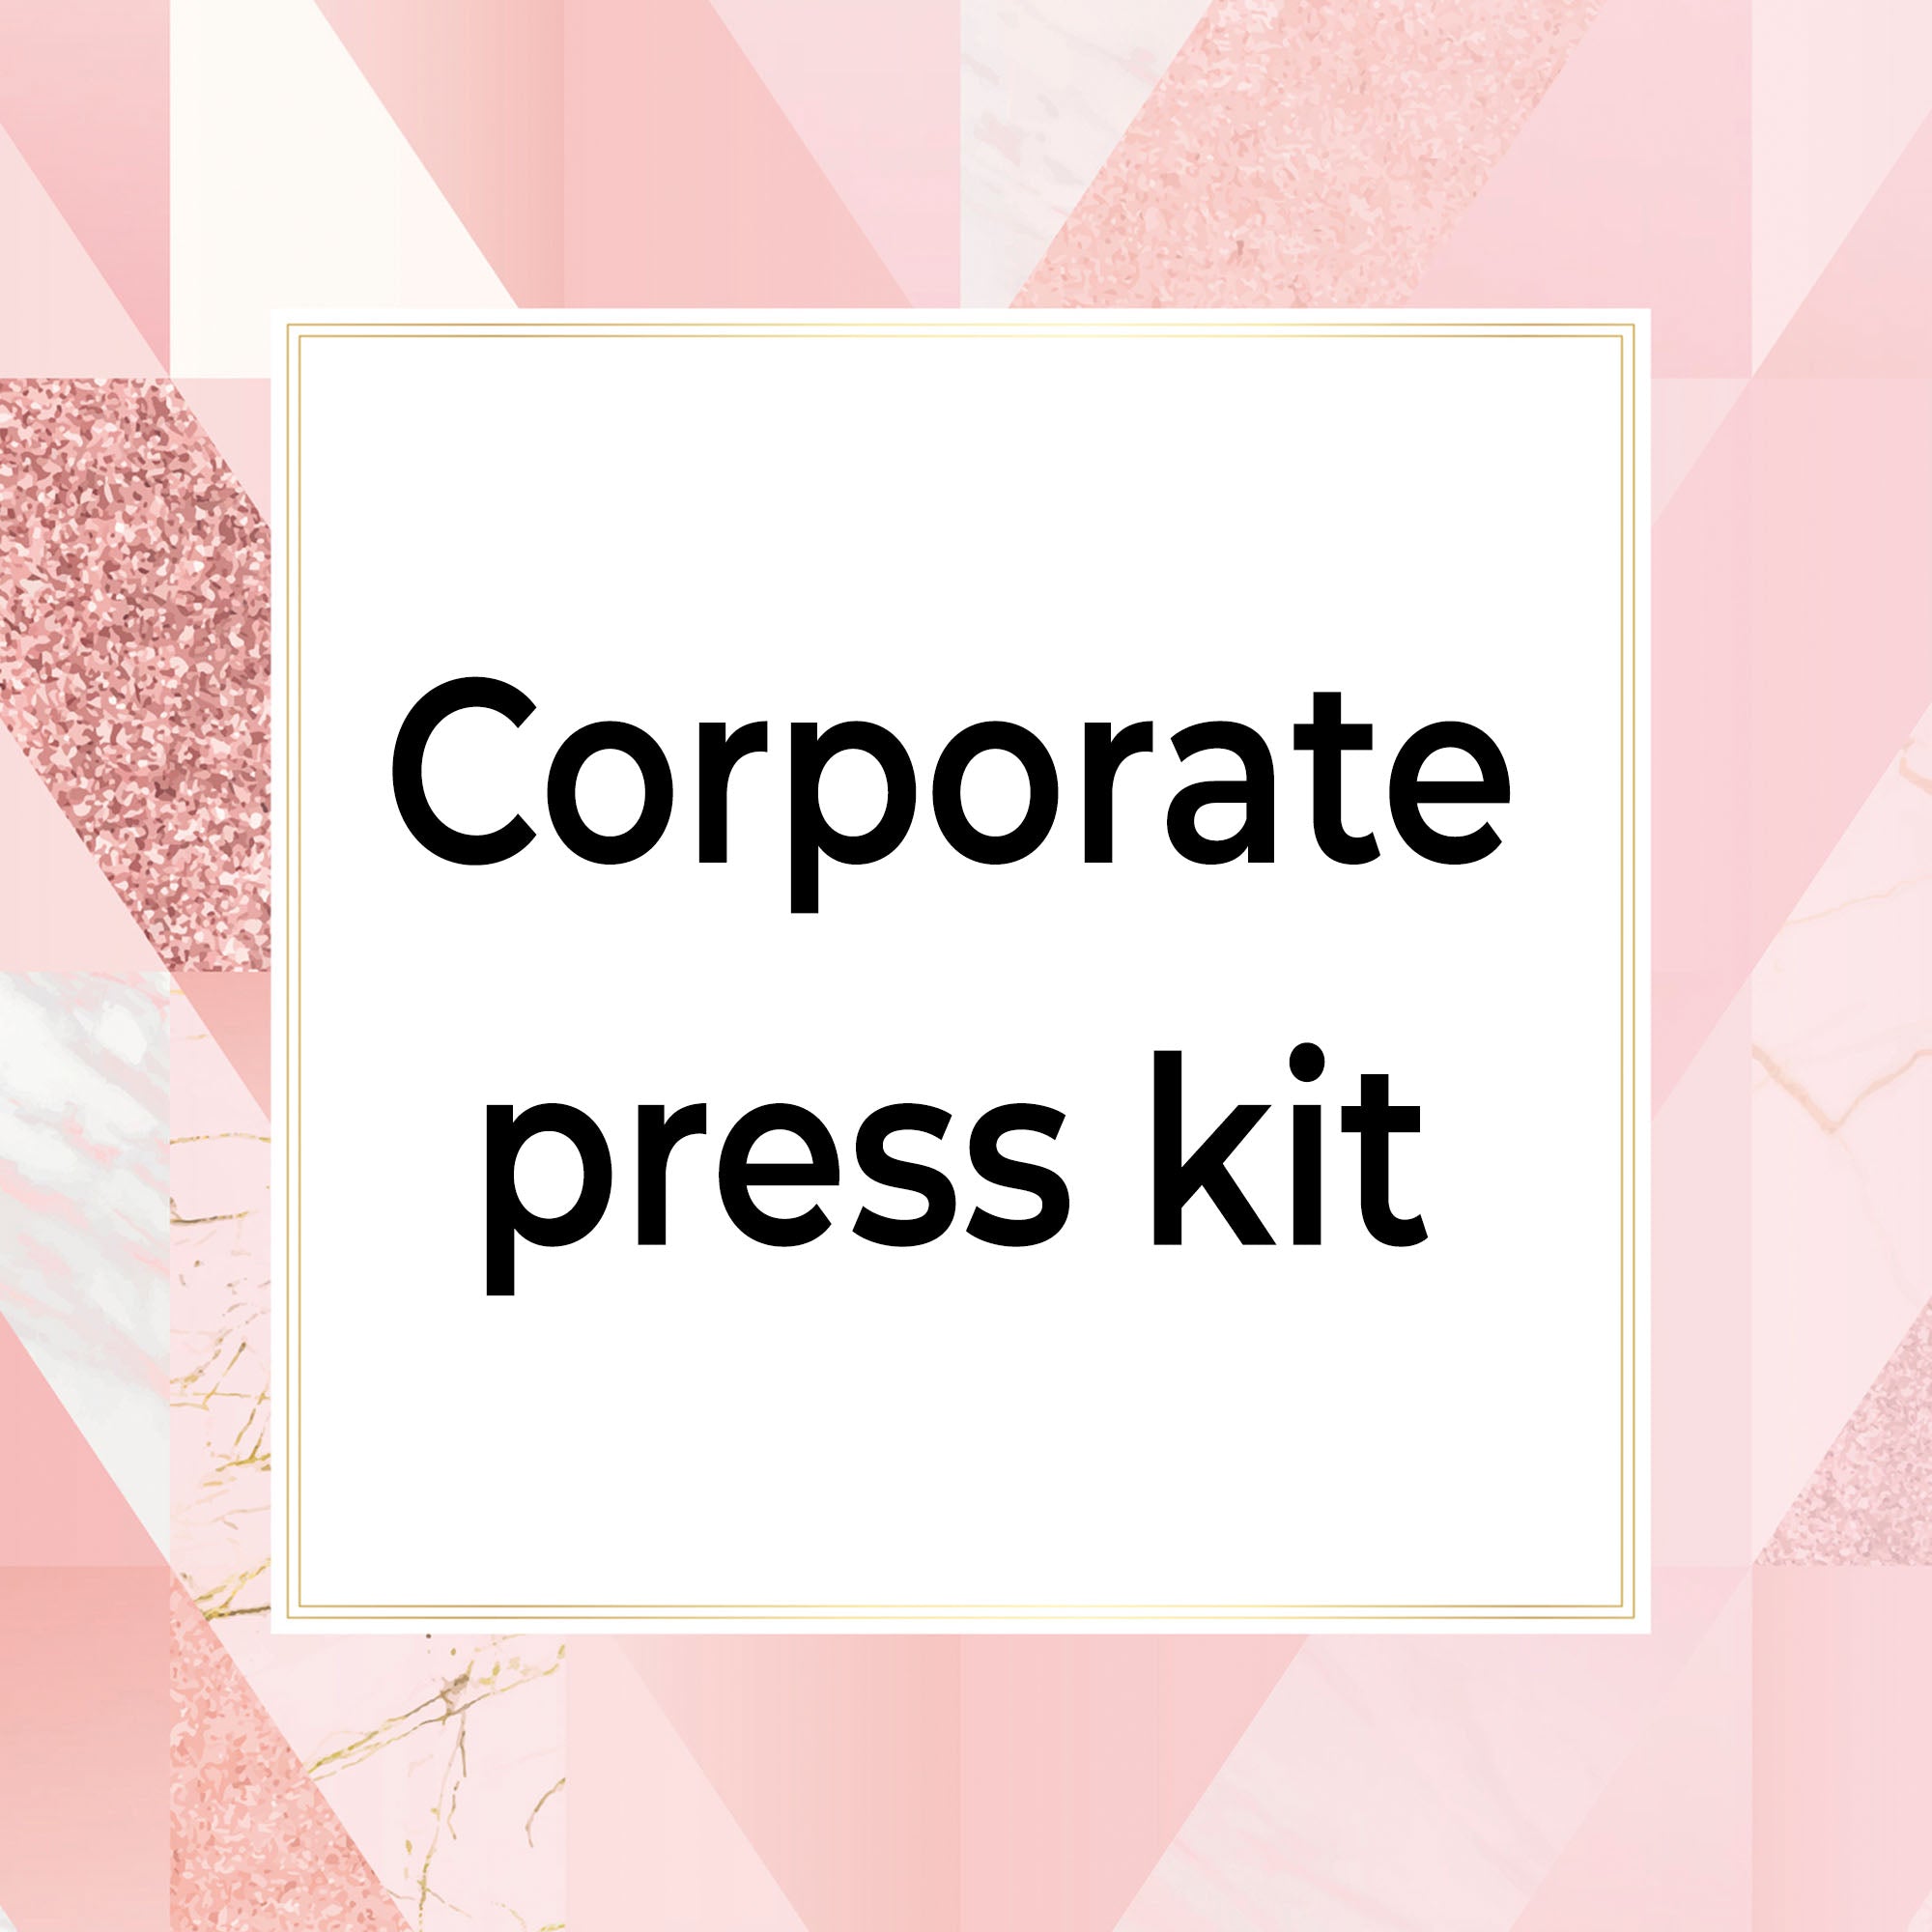 Corporate press kit